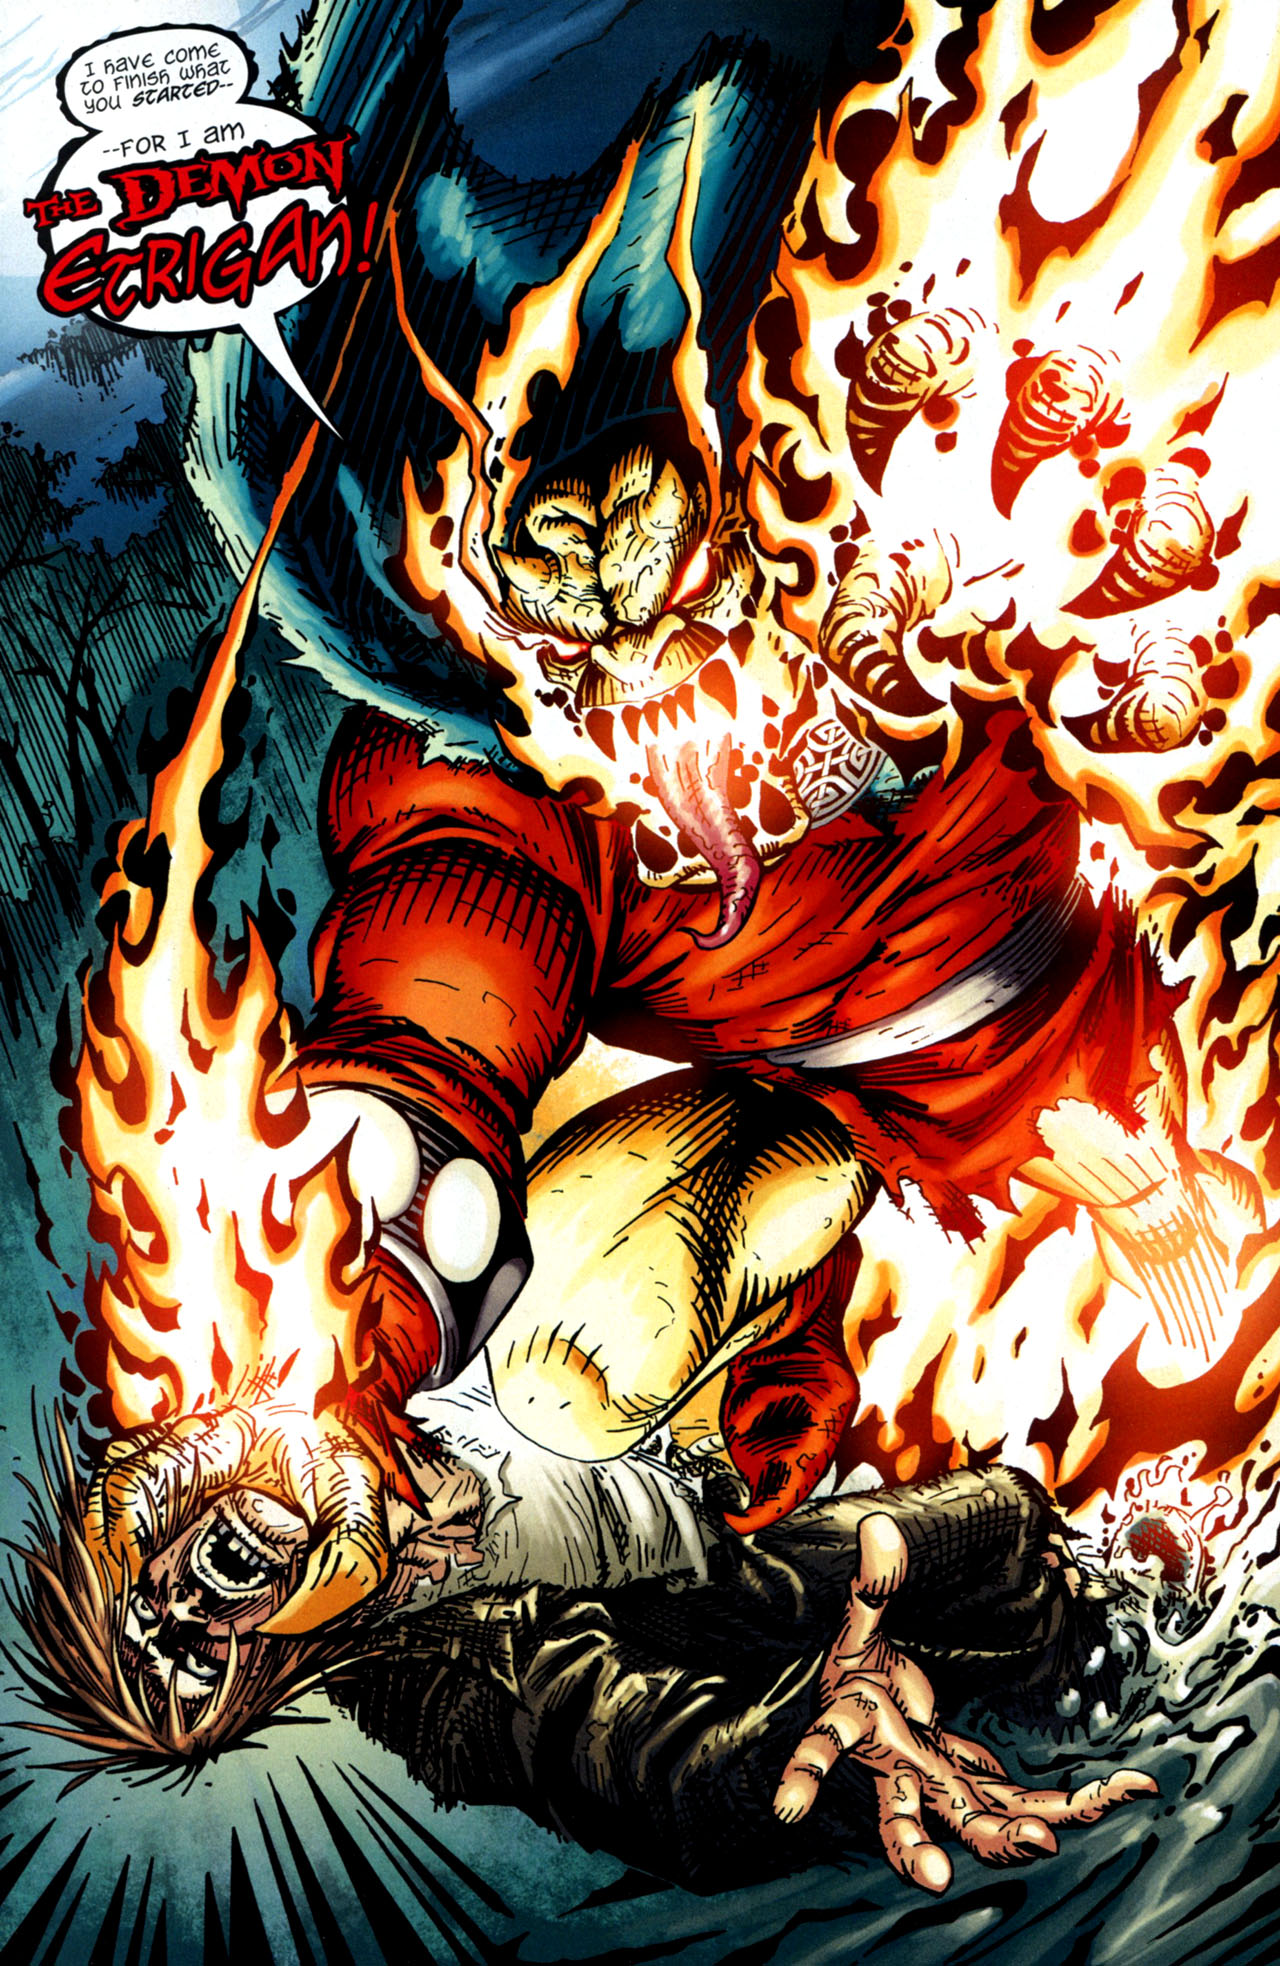 Etrigan the Demon vs Goku